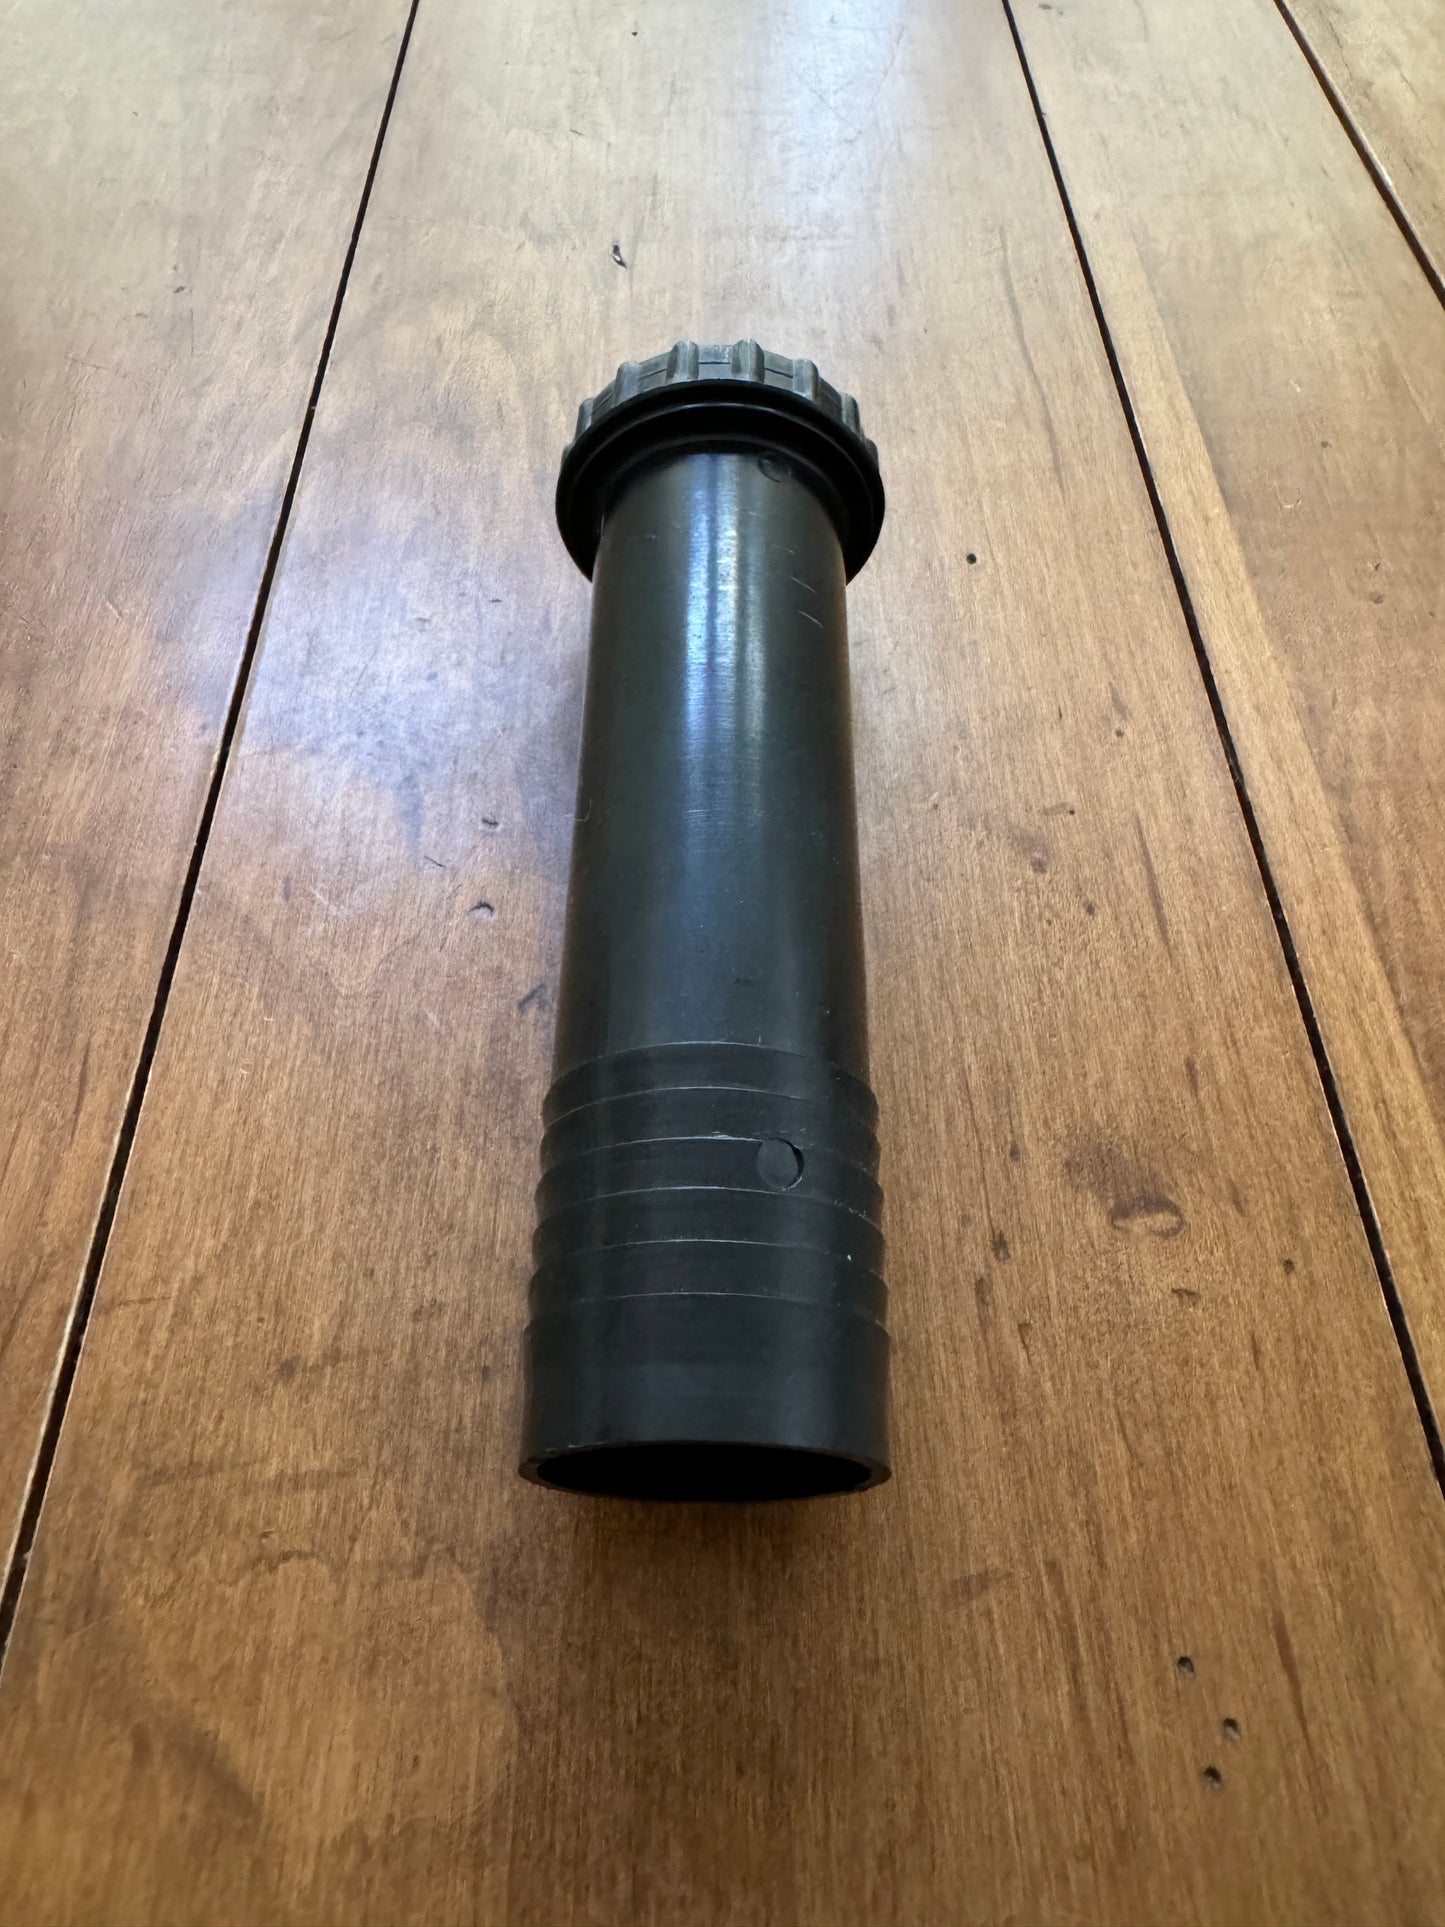 Westfalia filler tube and cap for water tank in Black.